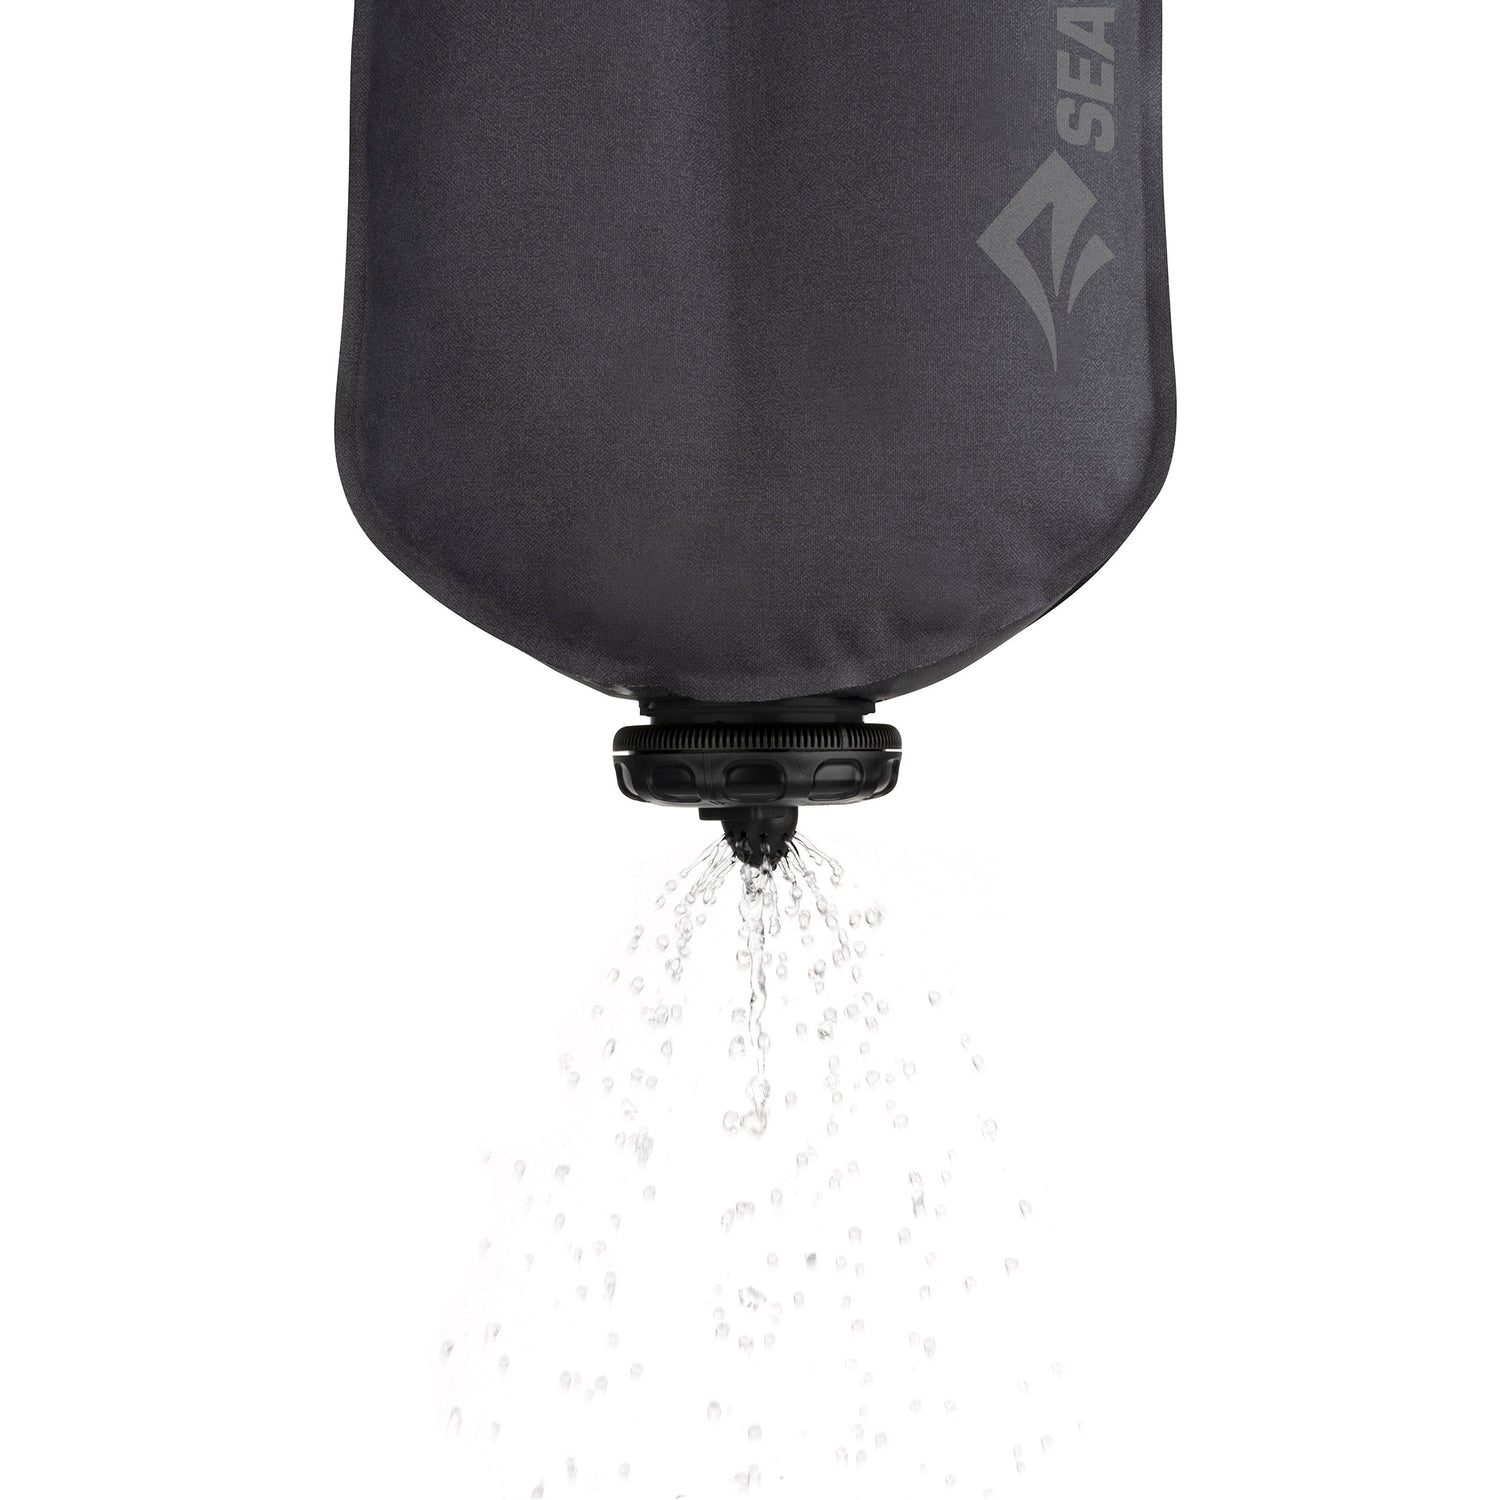 Warter cell X _ durable reservoir water bag _ pour nozzle